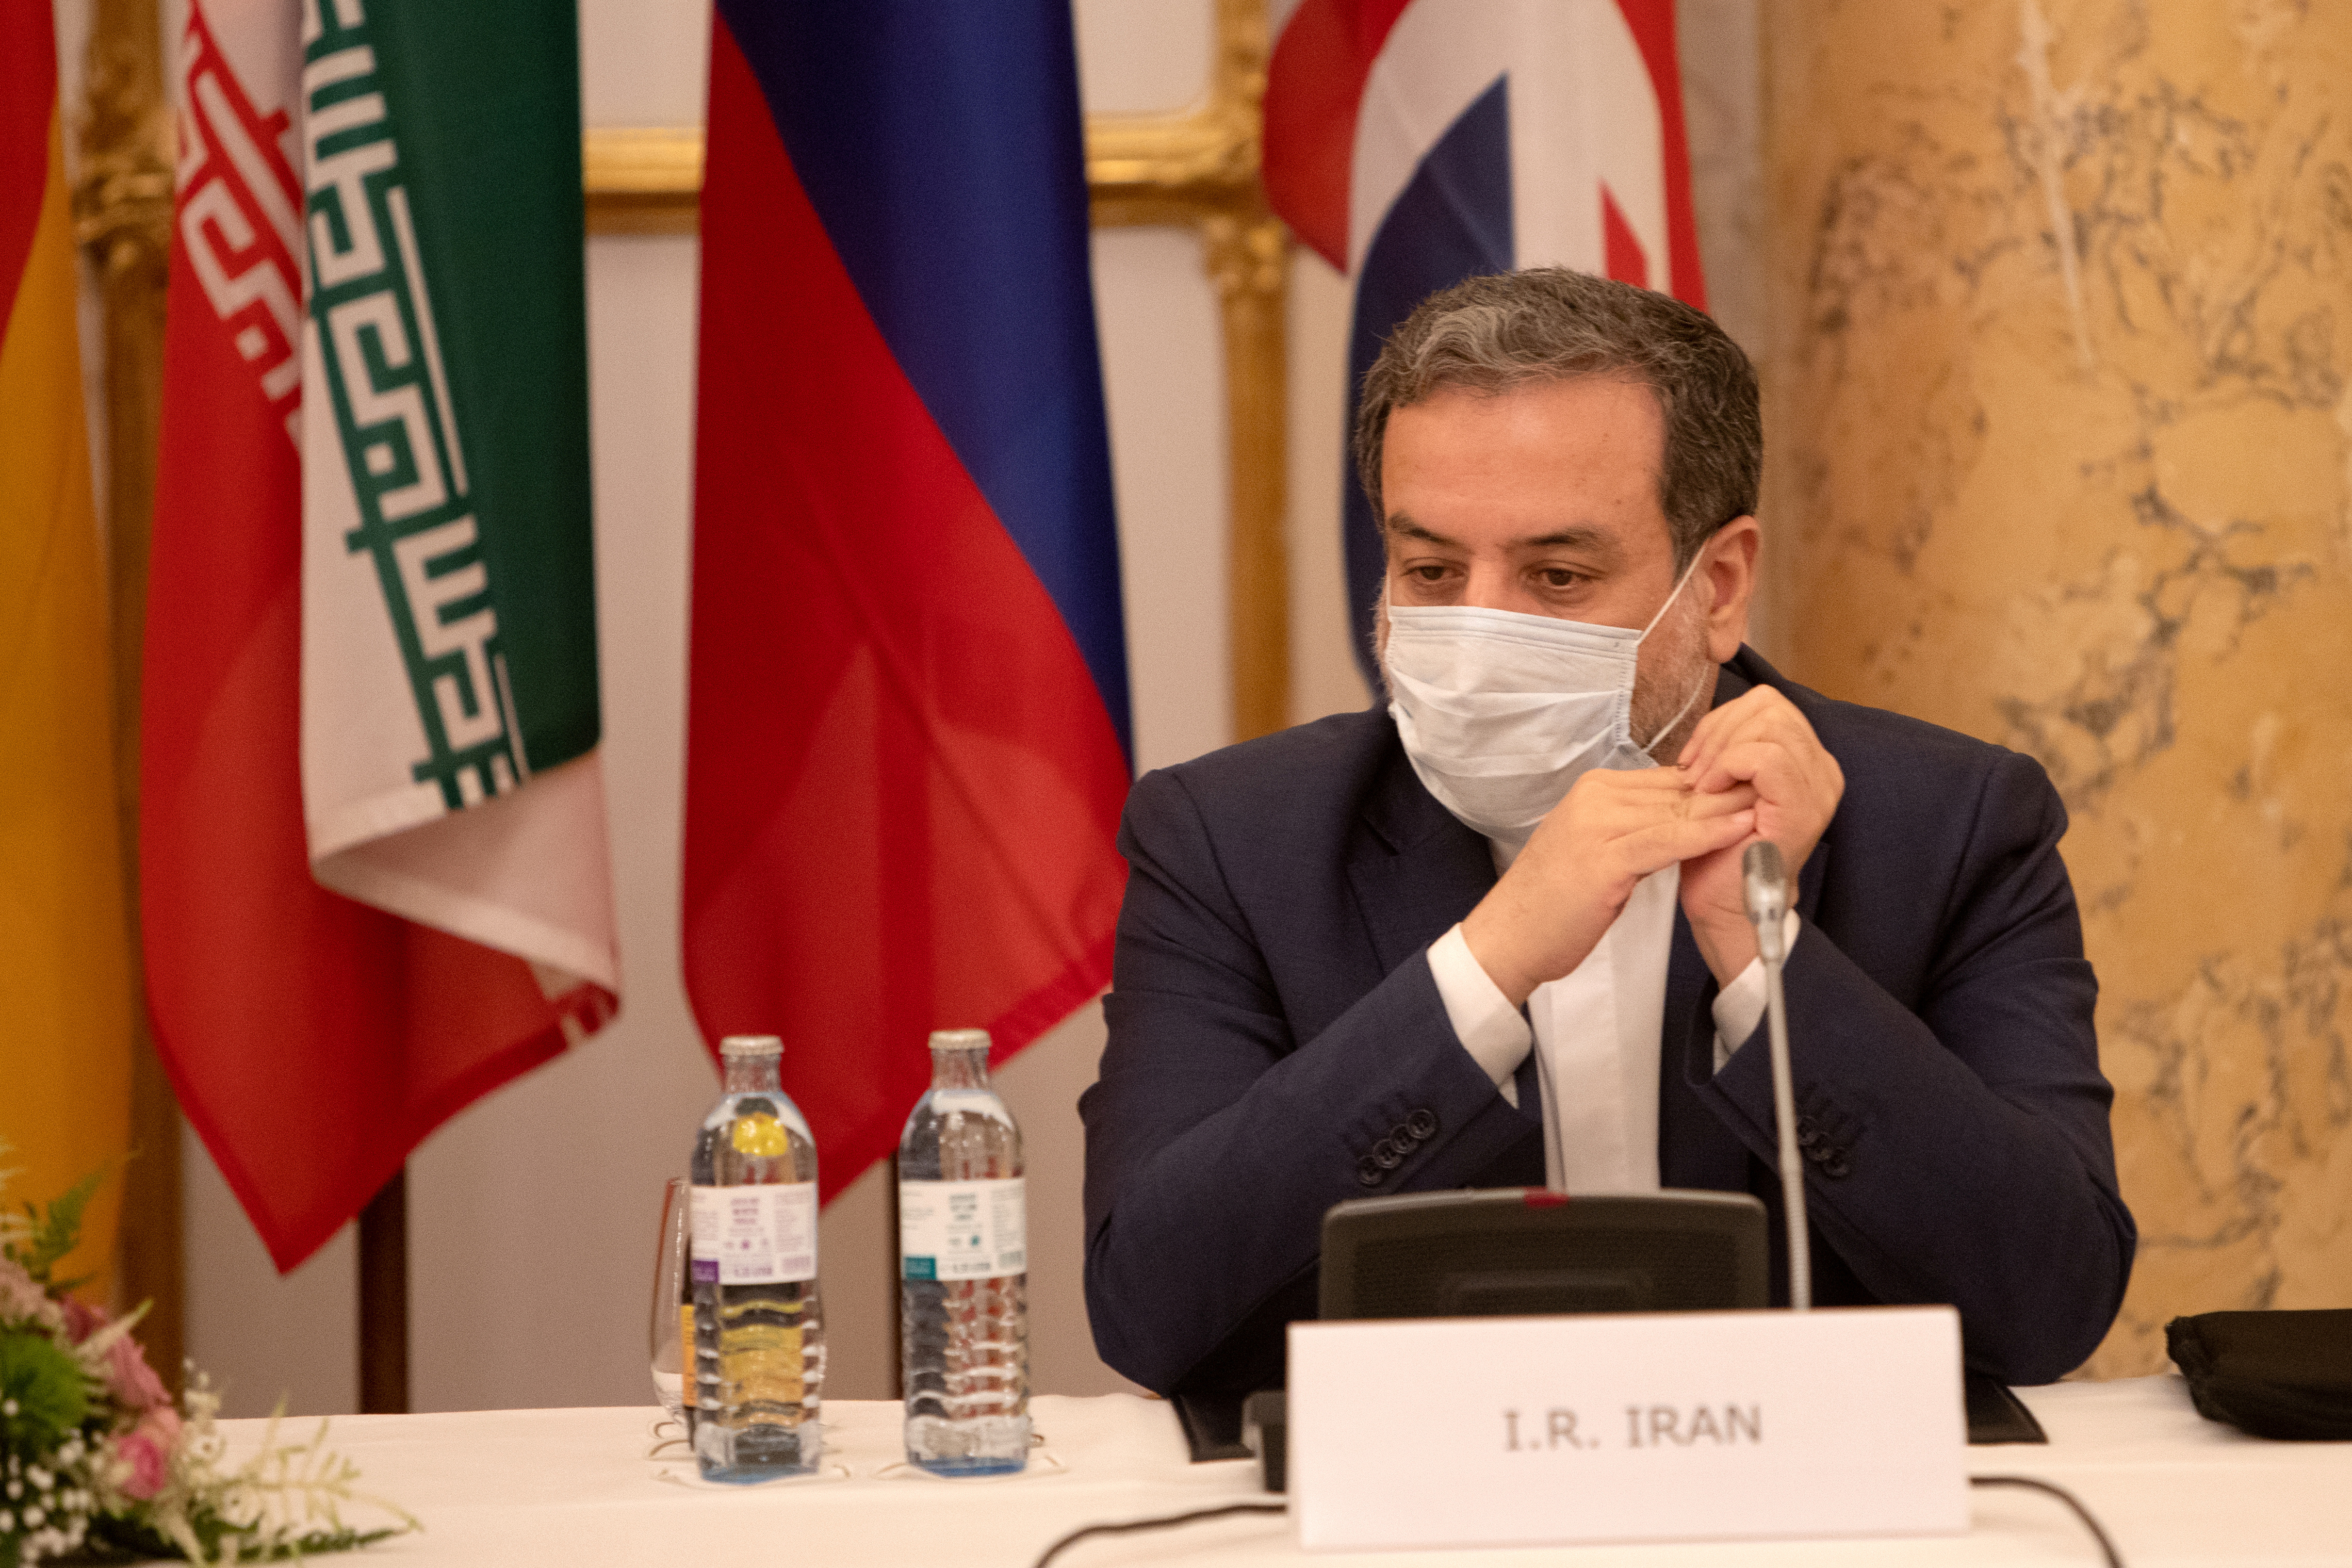 Iran's top nuclear negotiator Araqchi at a meeting in Vienna